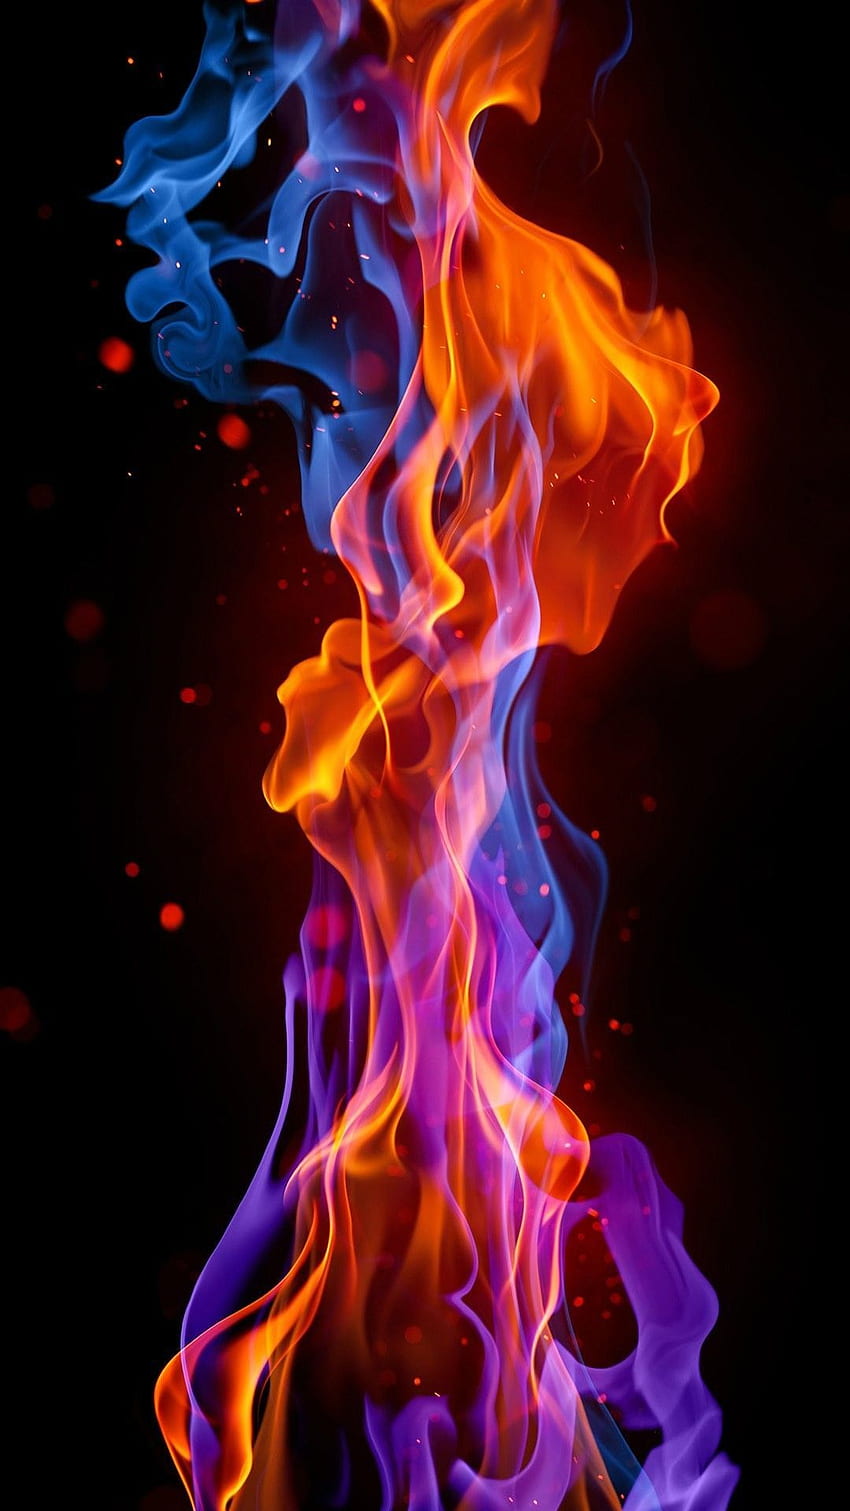 1,039 R Fire Logo Images, Stock Photos & Vectors | Shutterstock